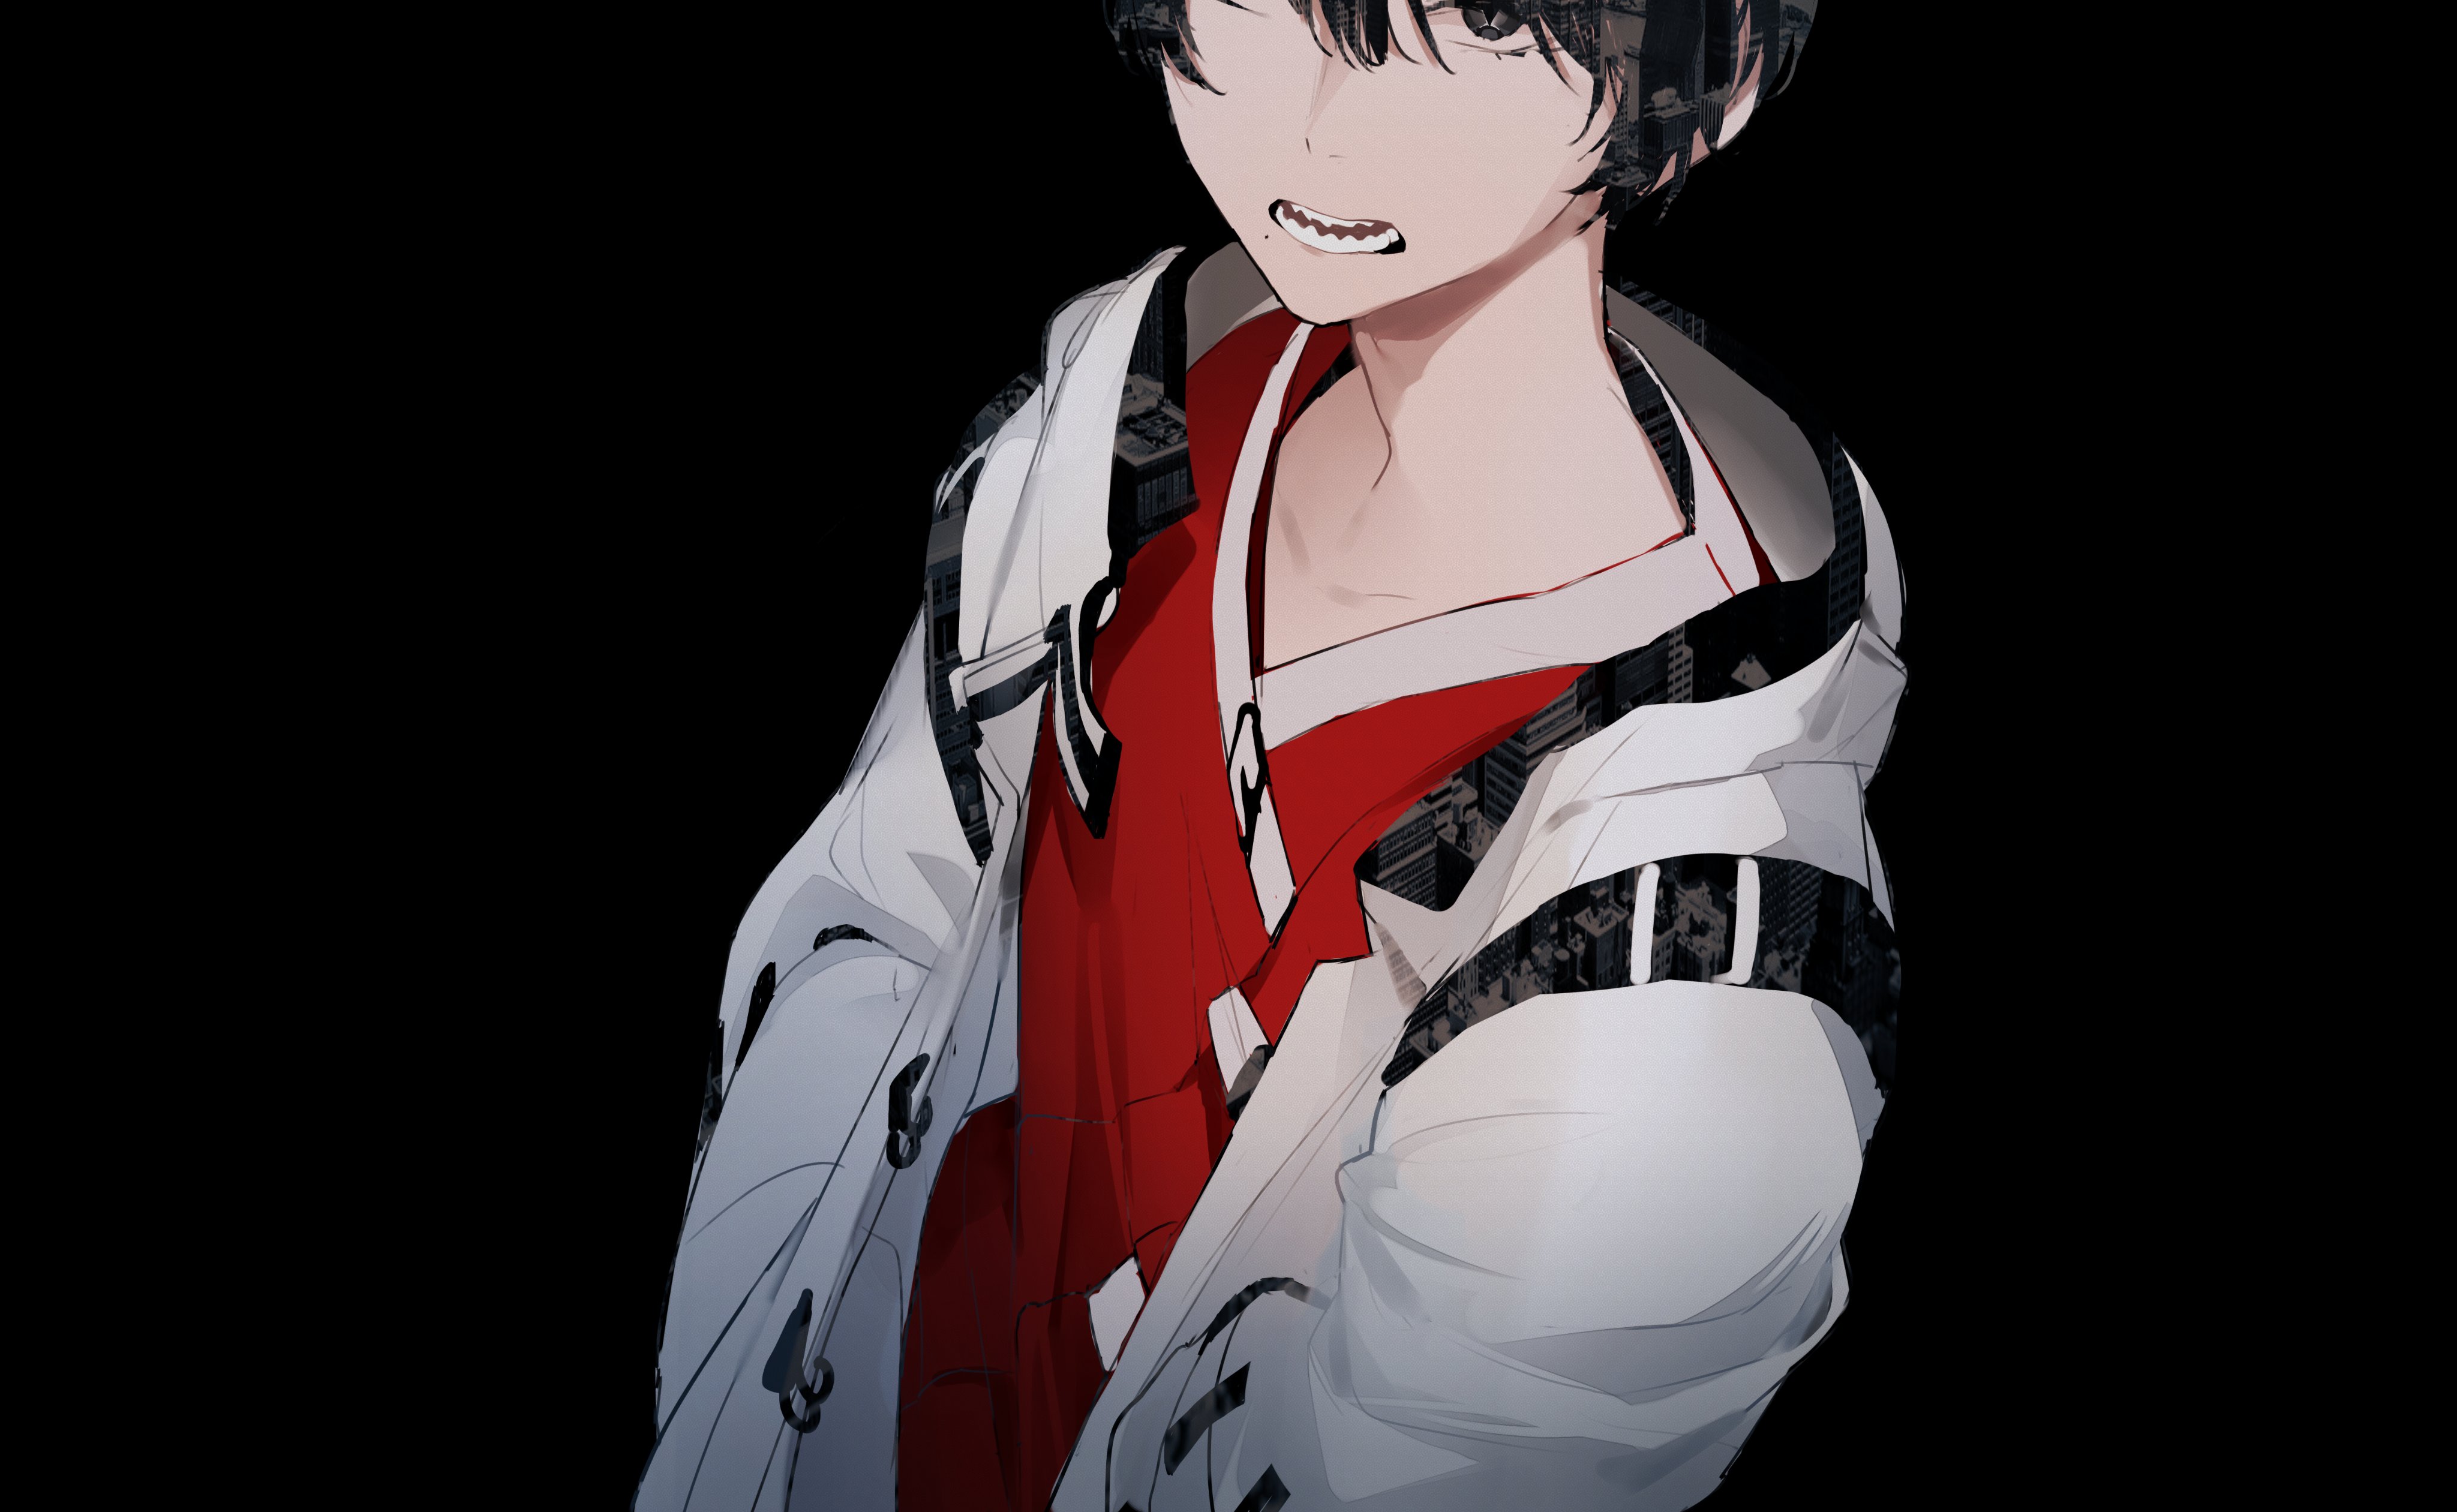 Anime 4096x2521 anime boys black background black hair black eyes jacket red shirt